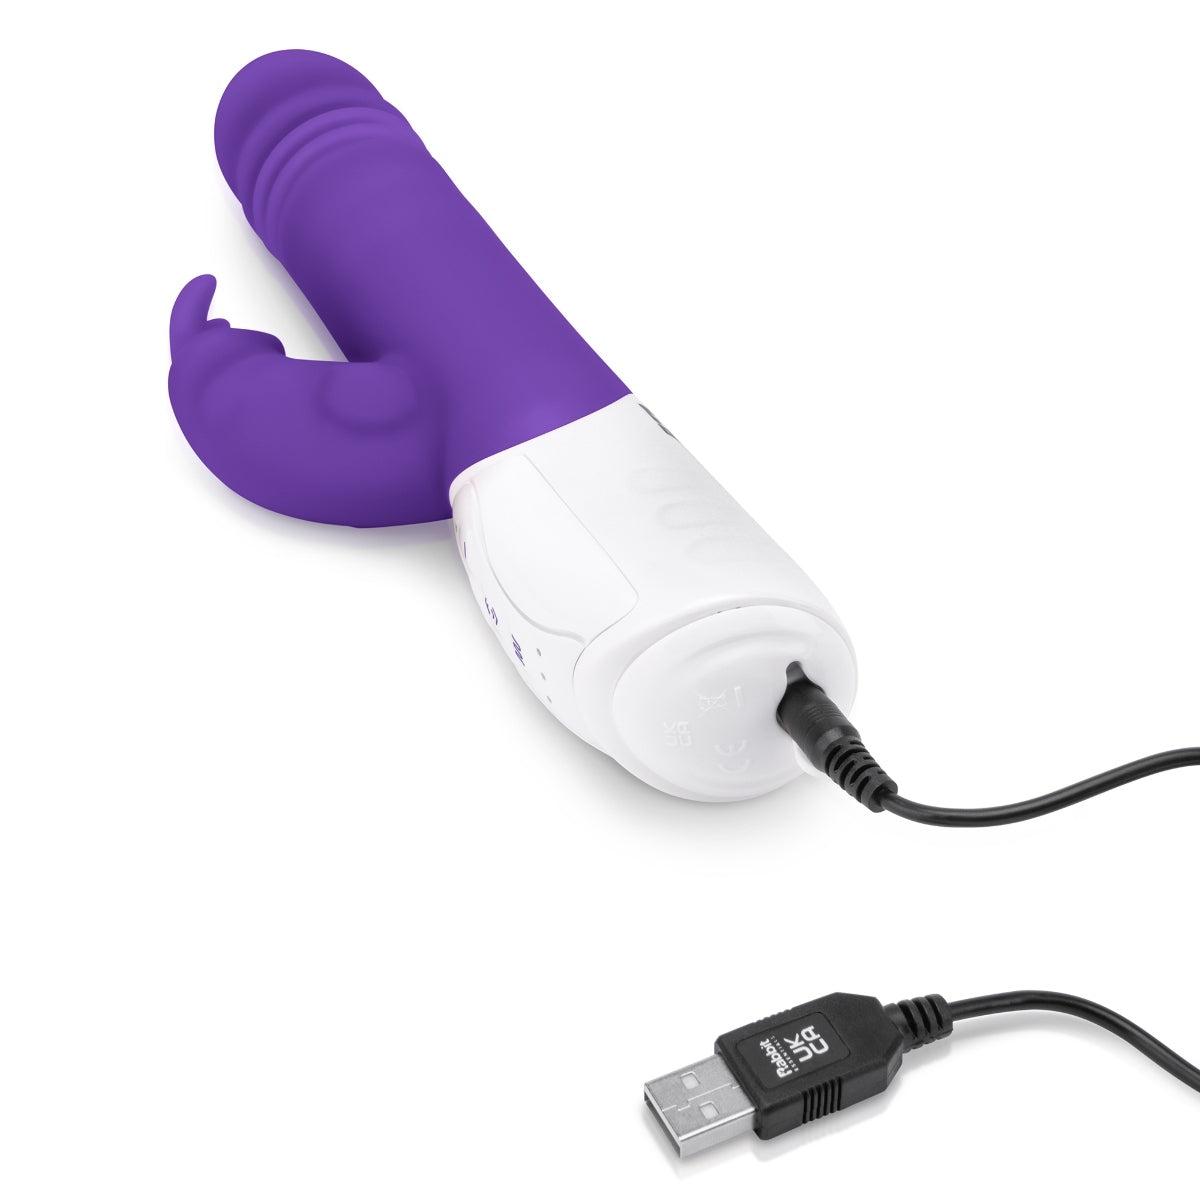 Rabbit Essentials G-Spot Thrusting Rabbit Vibrator With Throbbing Shaft Purple